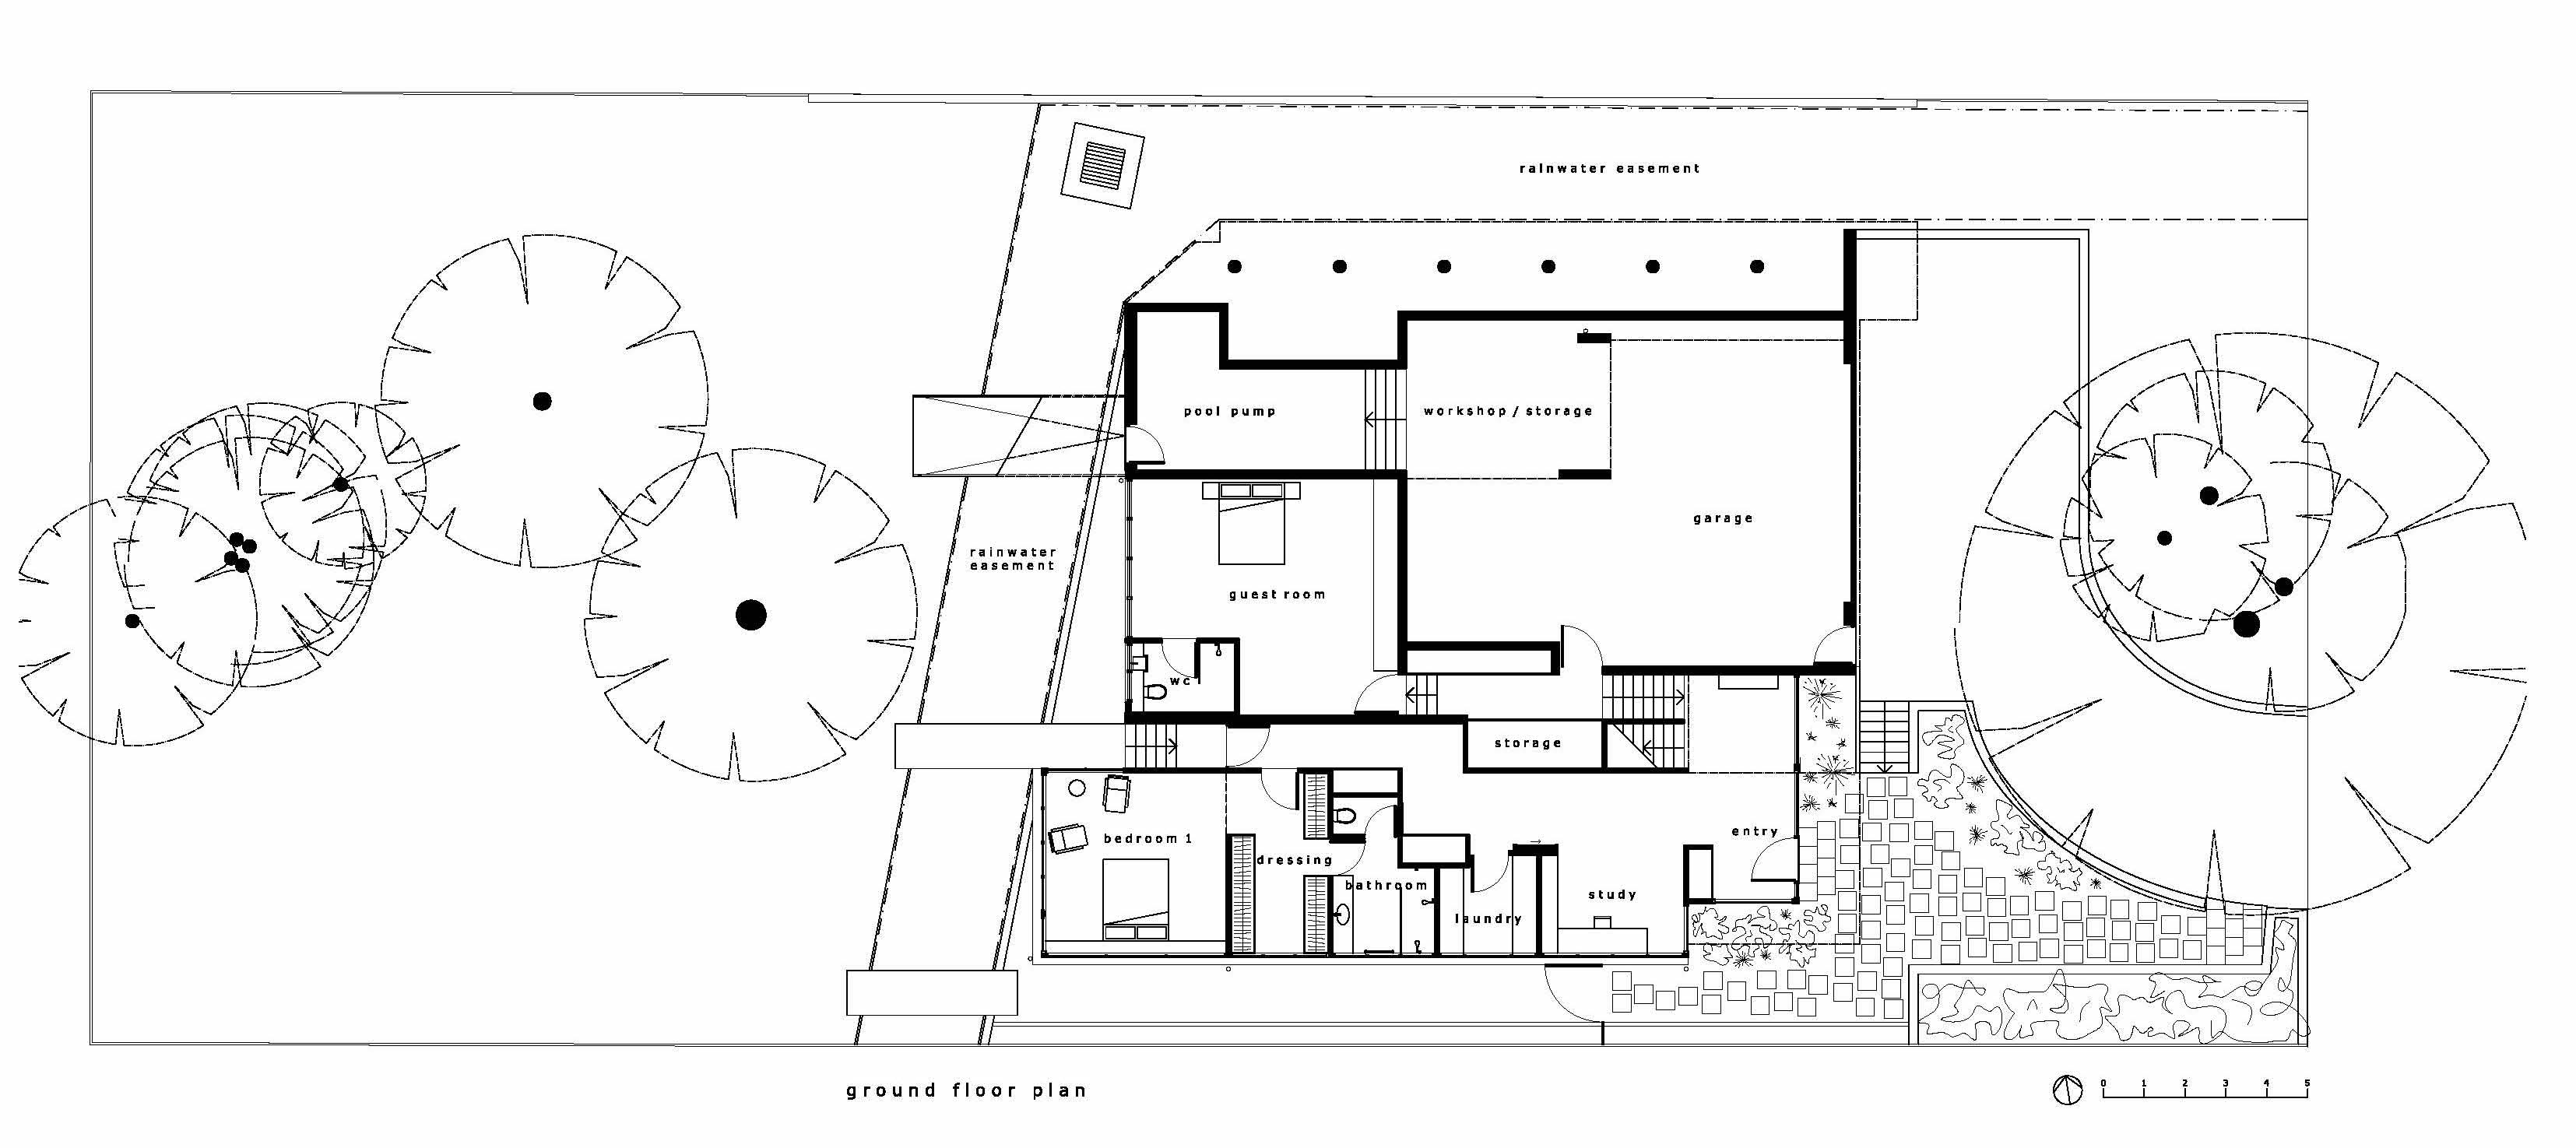 Fullagar Residence_plan 0_ground floor_Stephen Varady Image ©